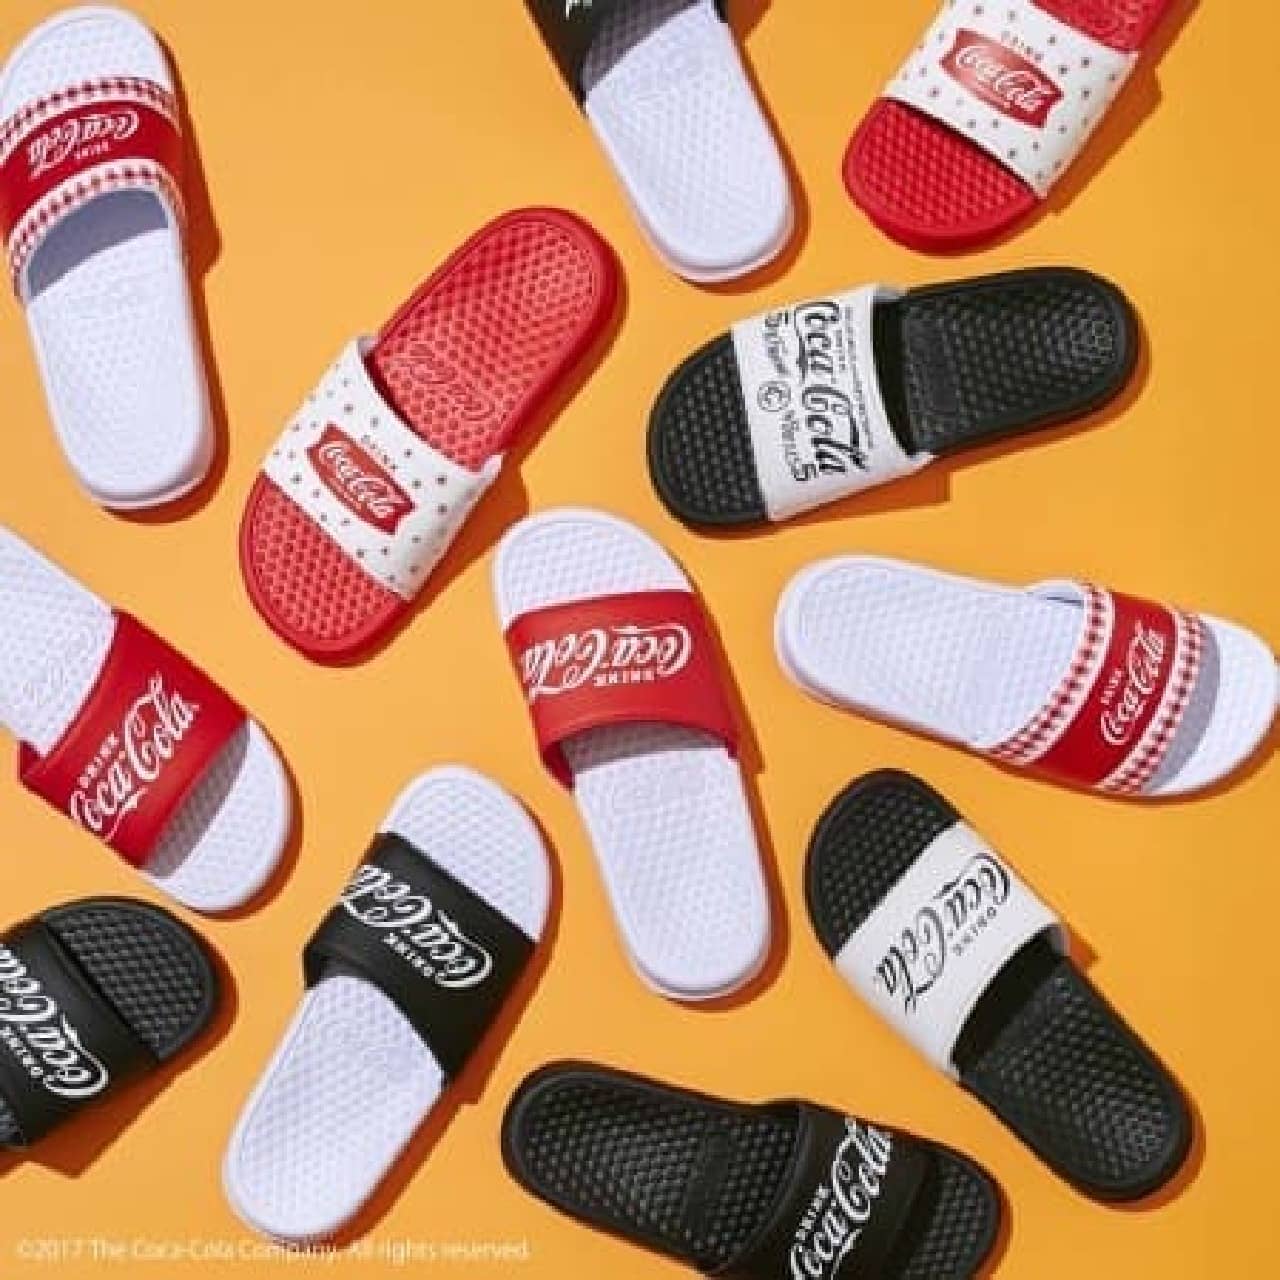 "Coca-Cola" shower sandals